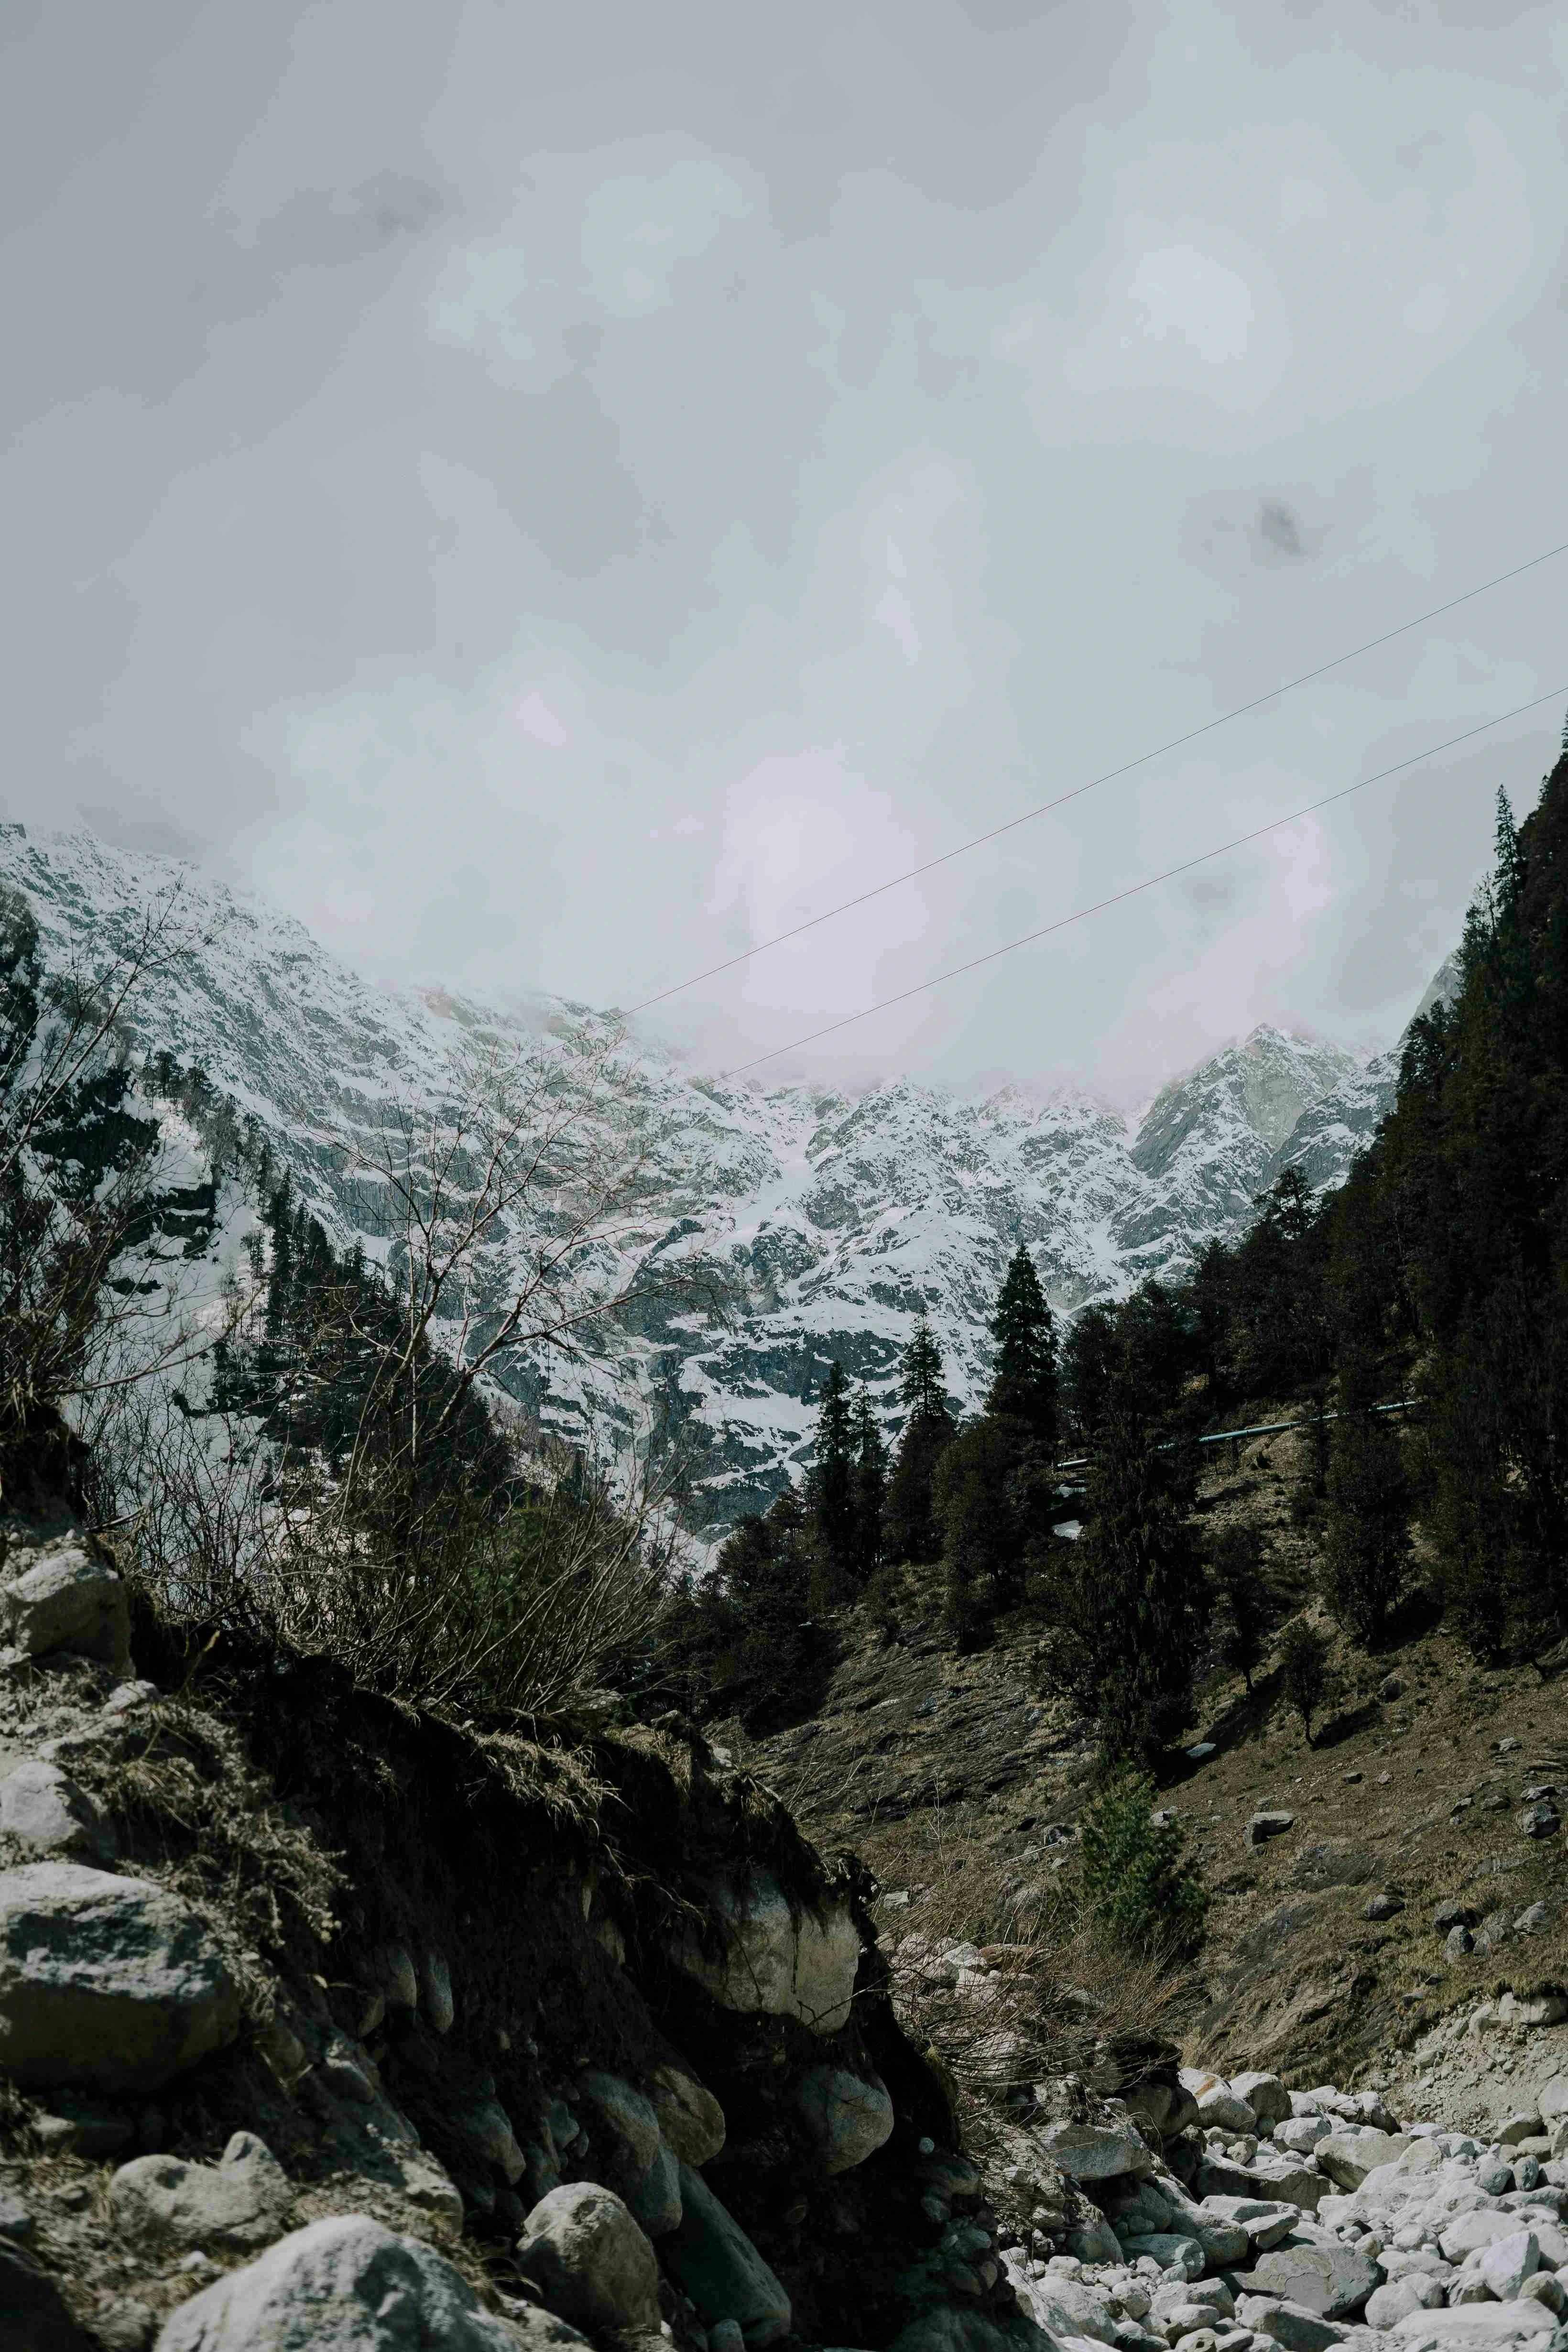 Kashmir Winter Trekking Adventure: Scenic Beauty of Snowy Peaks and Forest